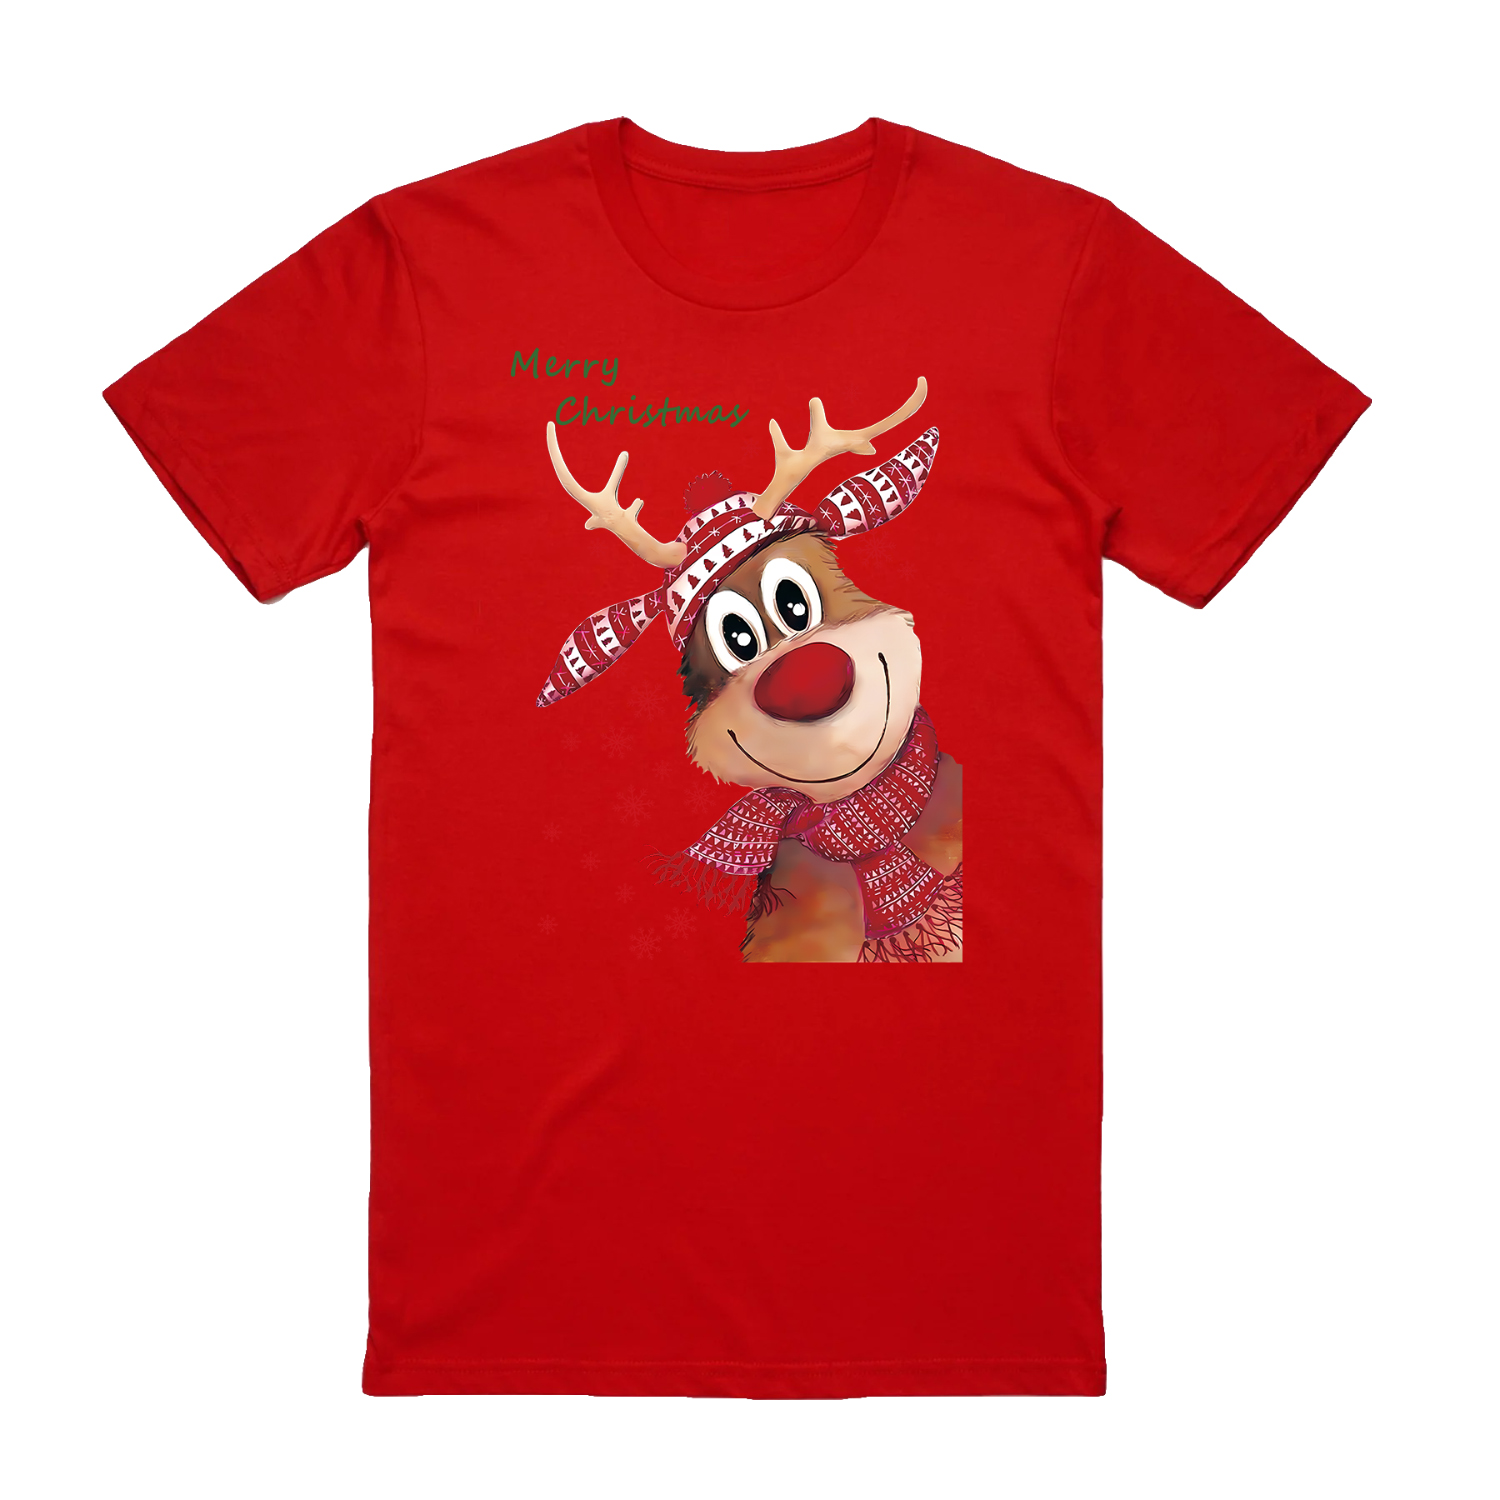 100% Cotton Christmas T-shirt Adult Unisex Tee Tops - Reindeer